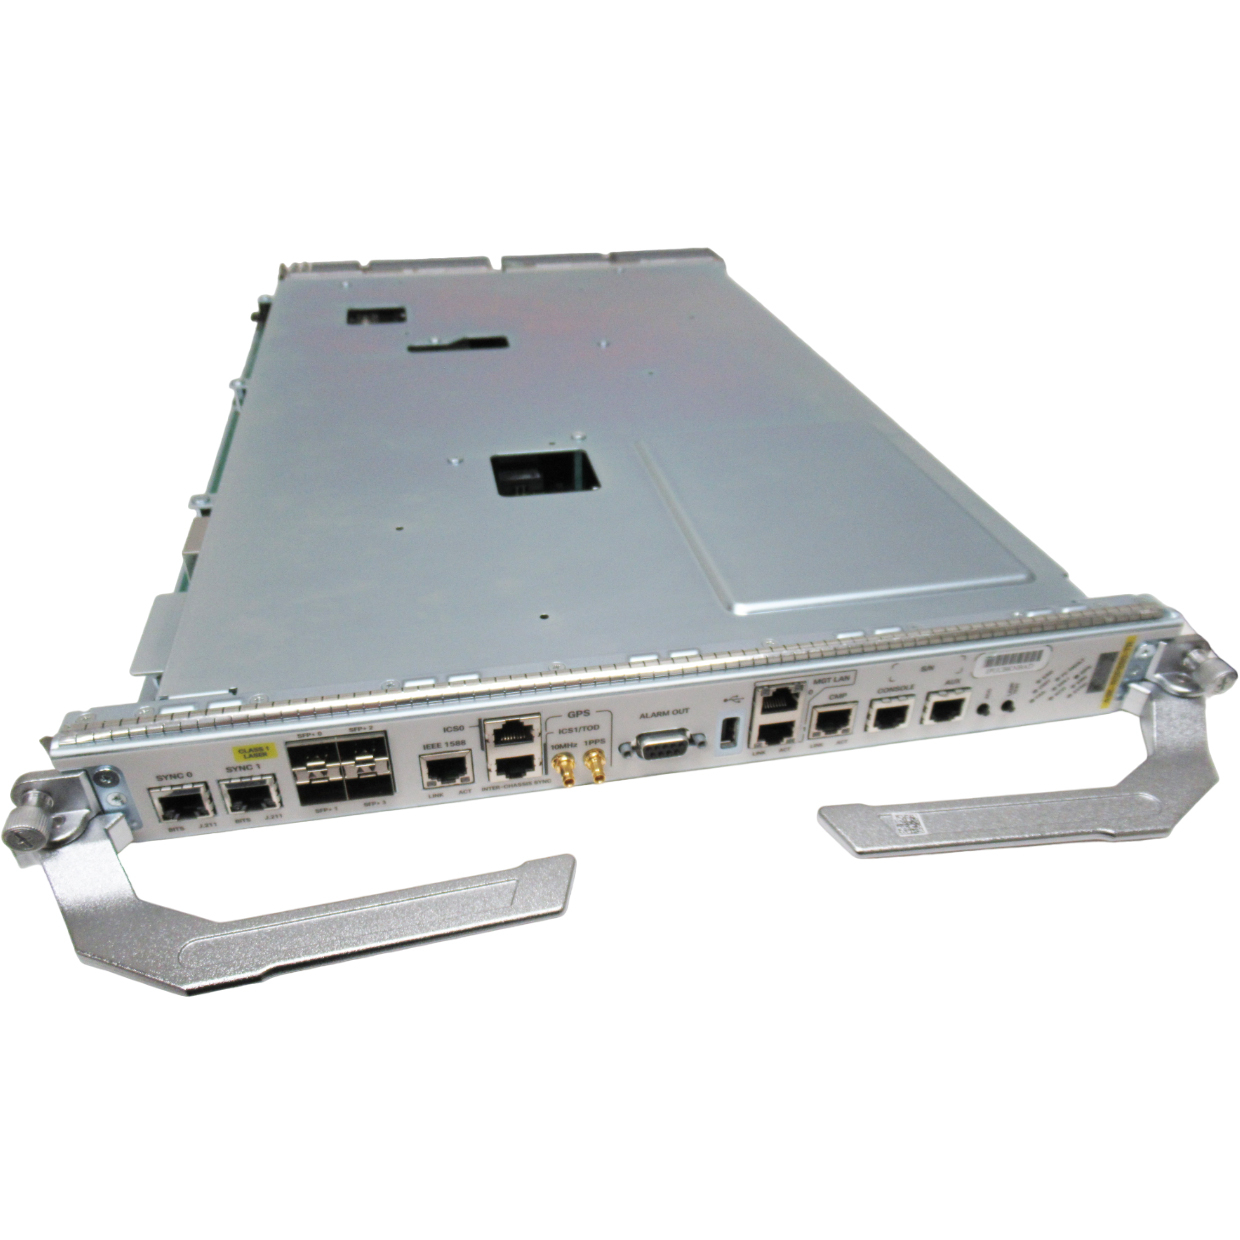 Cisco A9K-RSP880-SE